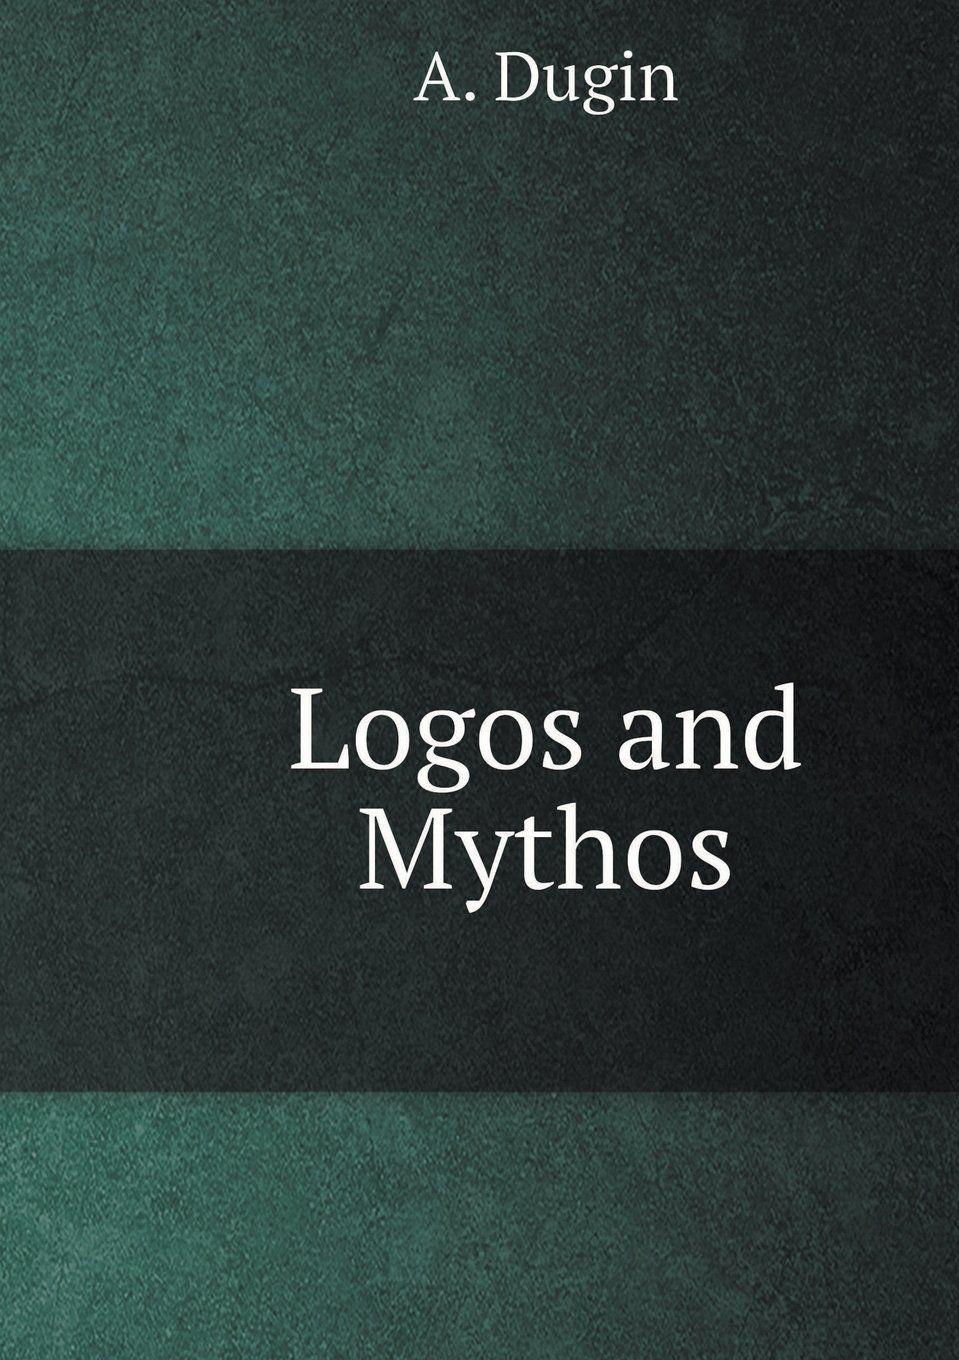 Mythos Logo - Logos and mythos (Russian Edition): A. Dugin: 9785519525817: Amazon